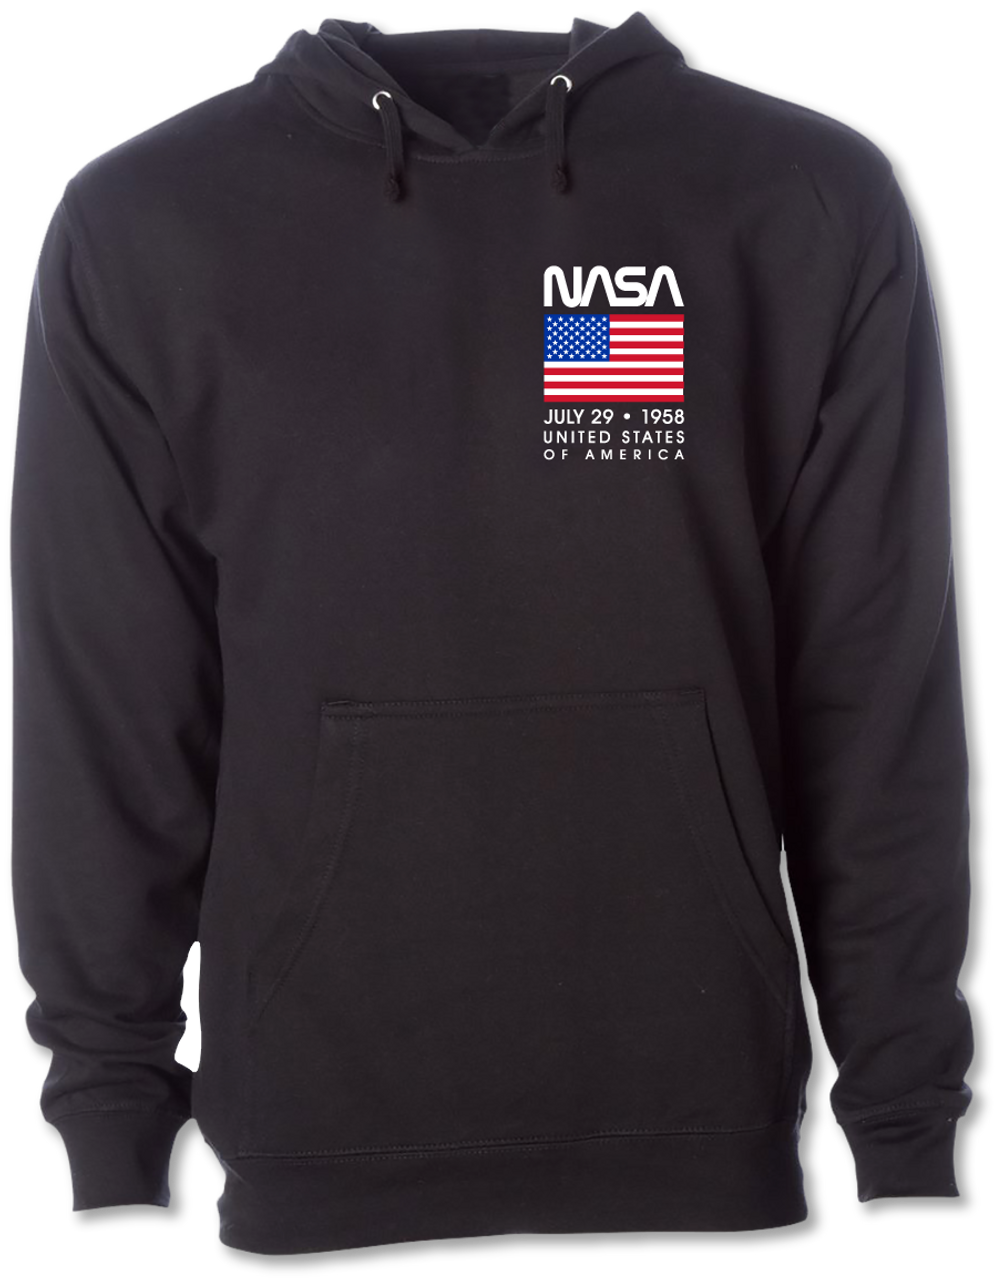 NASA Worm Logo - USA July 29 1958 Adult Medium Weight Hoodie - NASA Gear